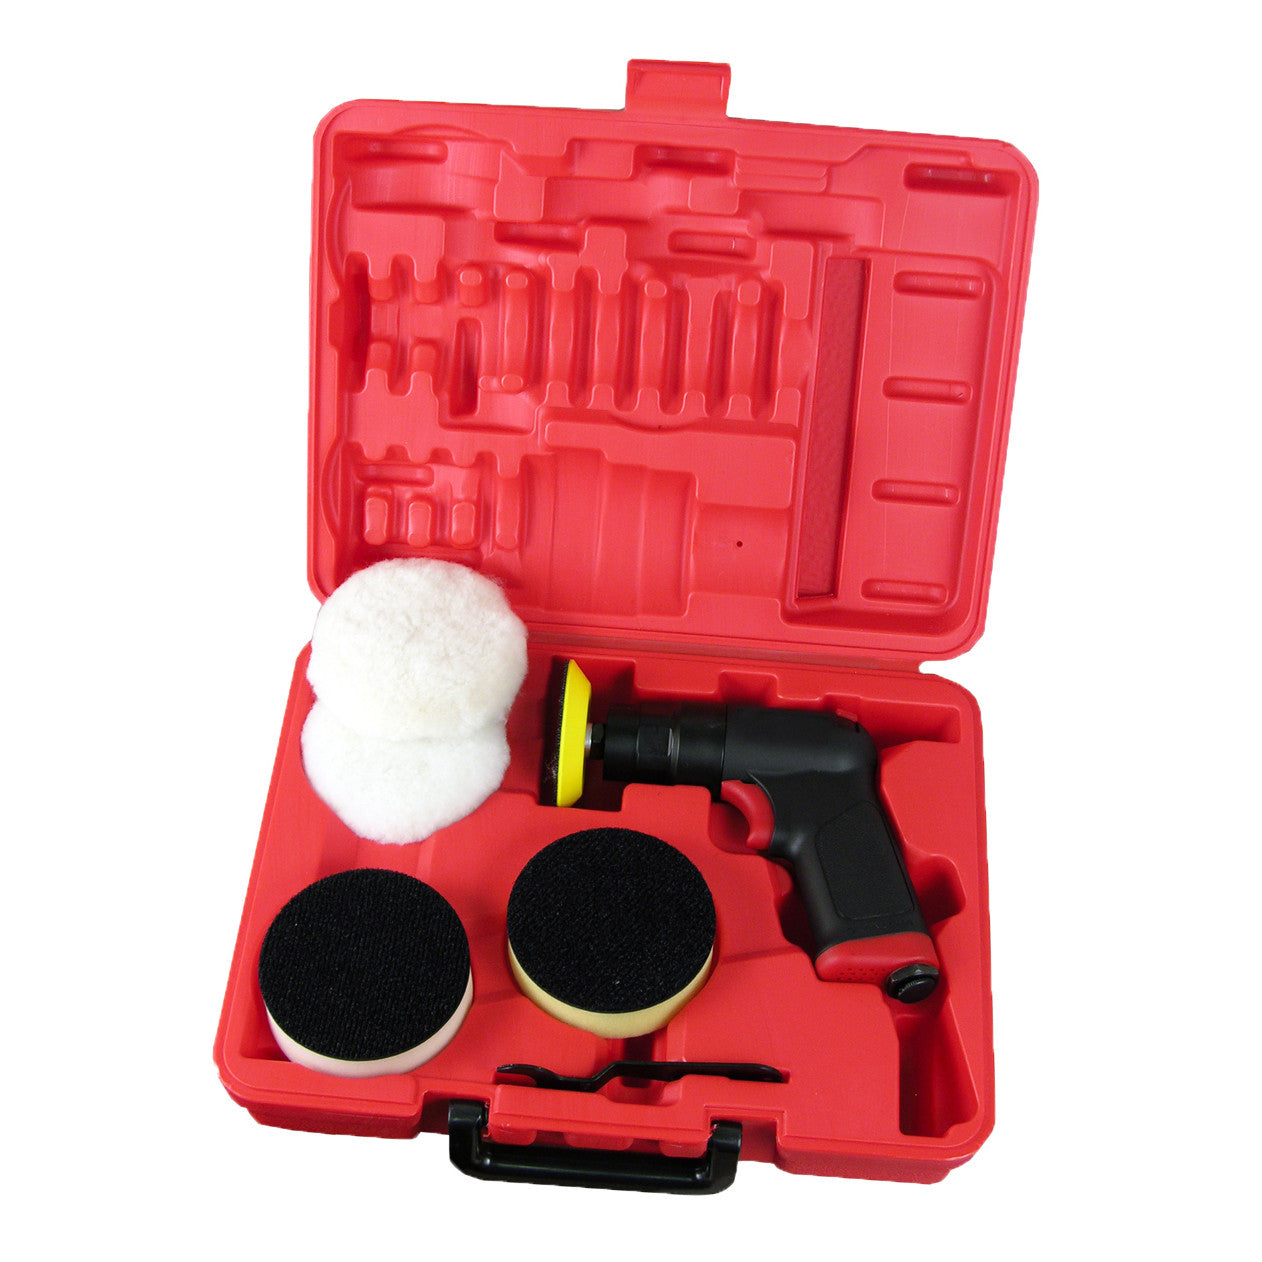 TGR 3 Car Buffing & Polishing Pad Kit - Turn Your Drill into